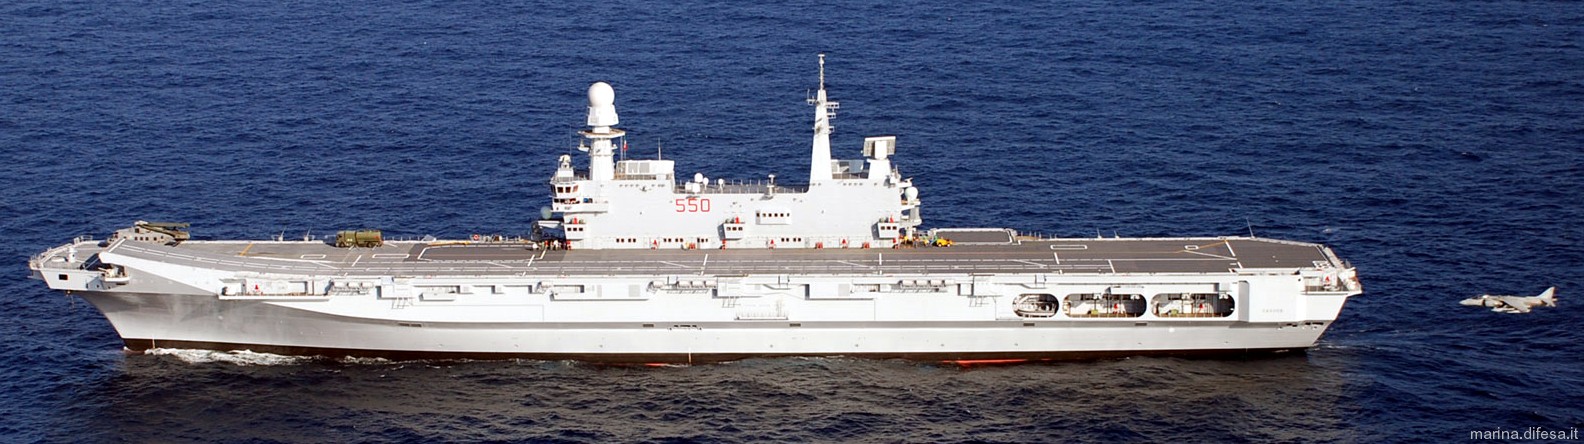 c-550 its cavour aircraft carrier italian navy marina militare 30